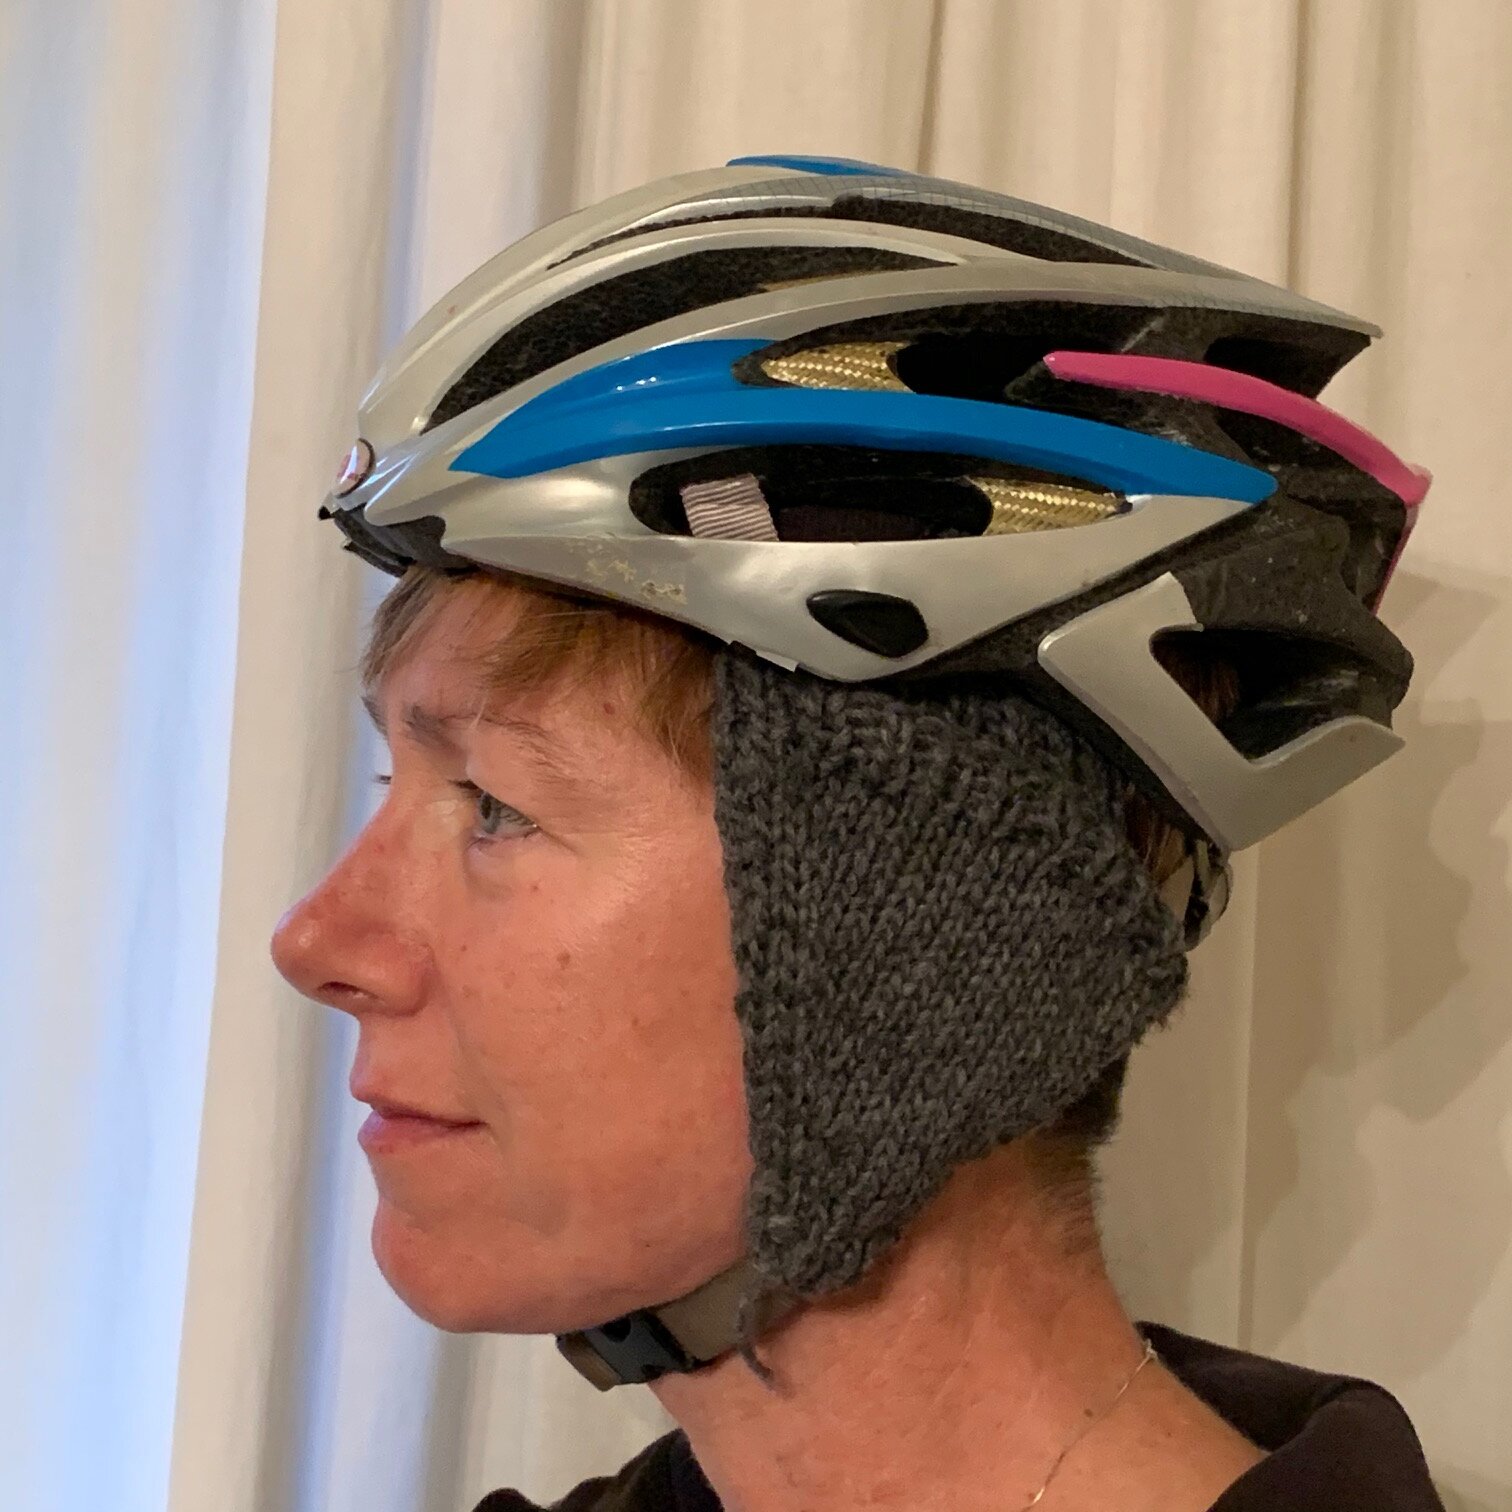 bike helmet with winter hat underneath